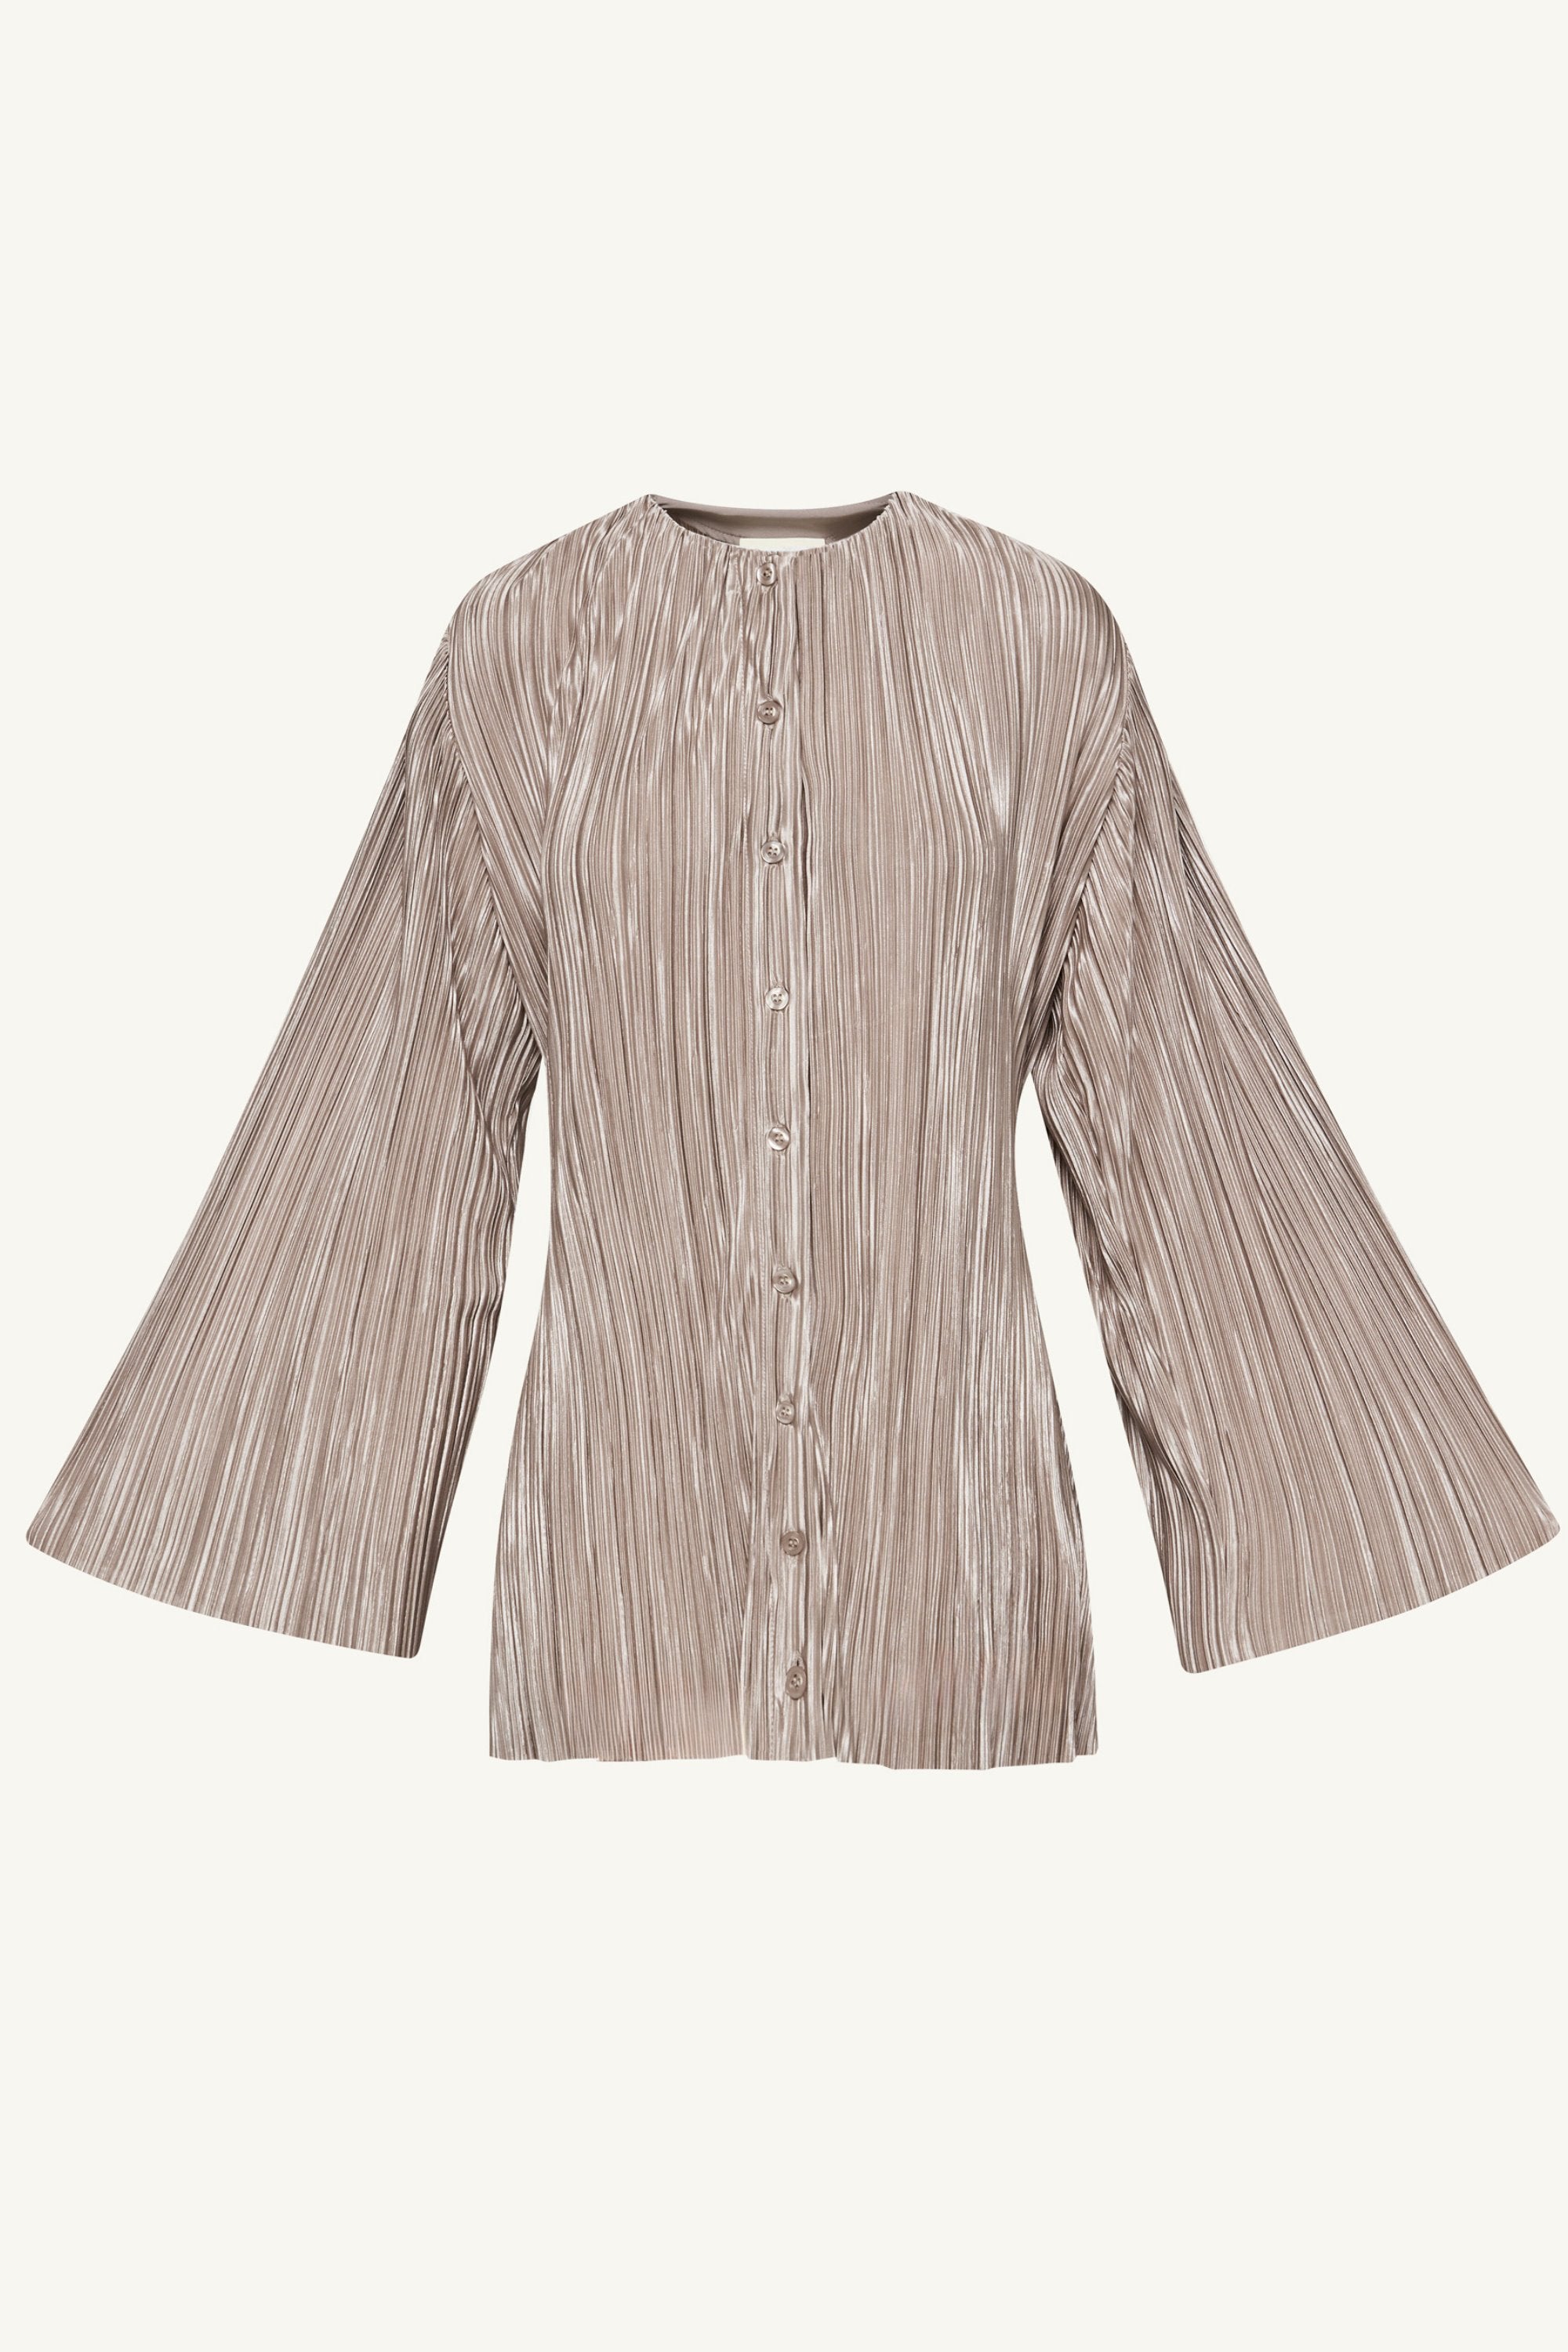 Tania Satin Plisse Button Down Top - Taupe Clothing Veiled 